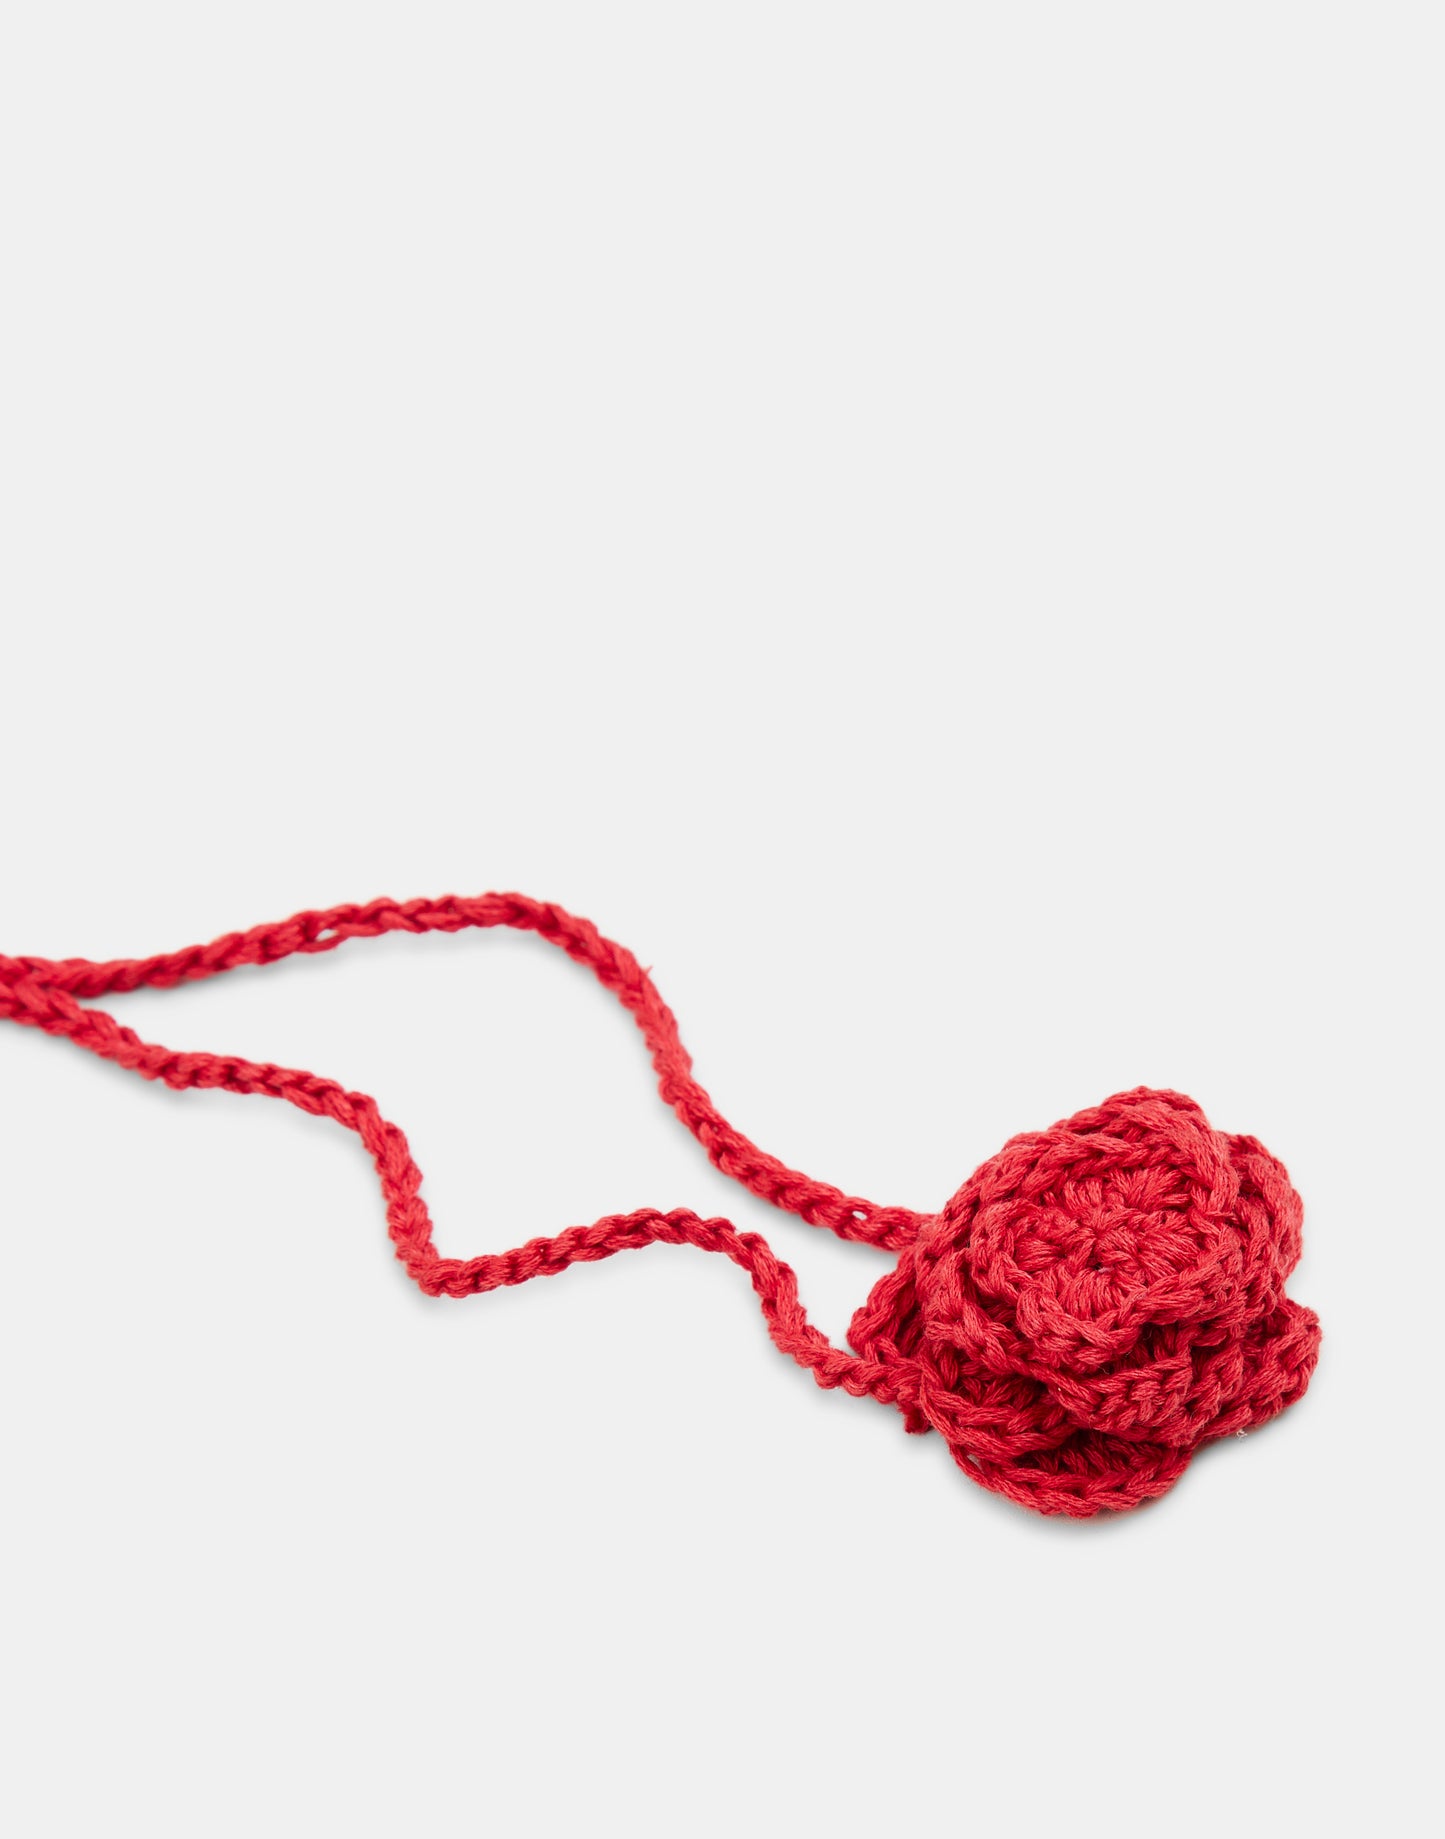 Collier crochet fleur